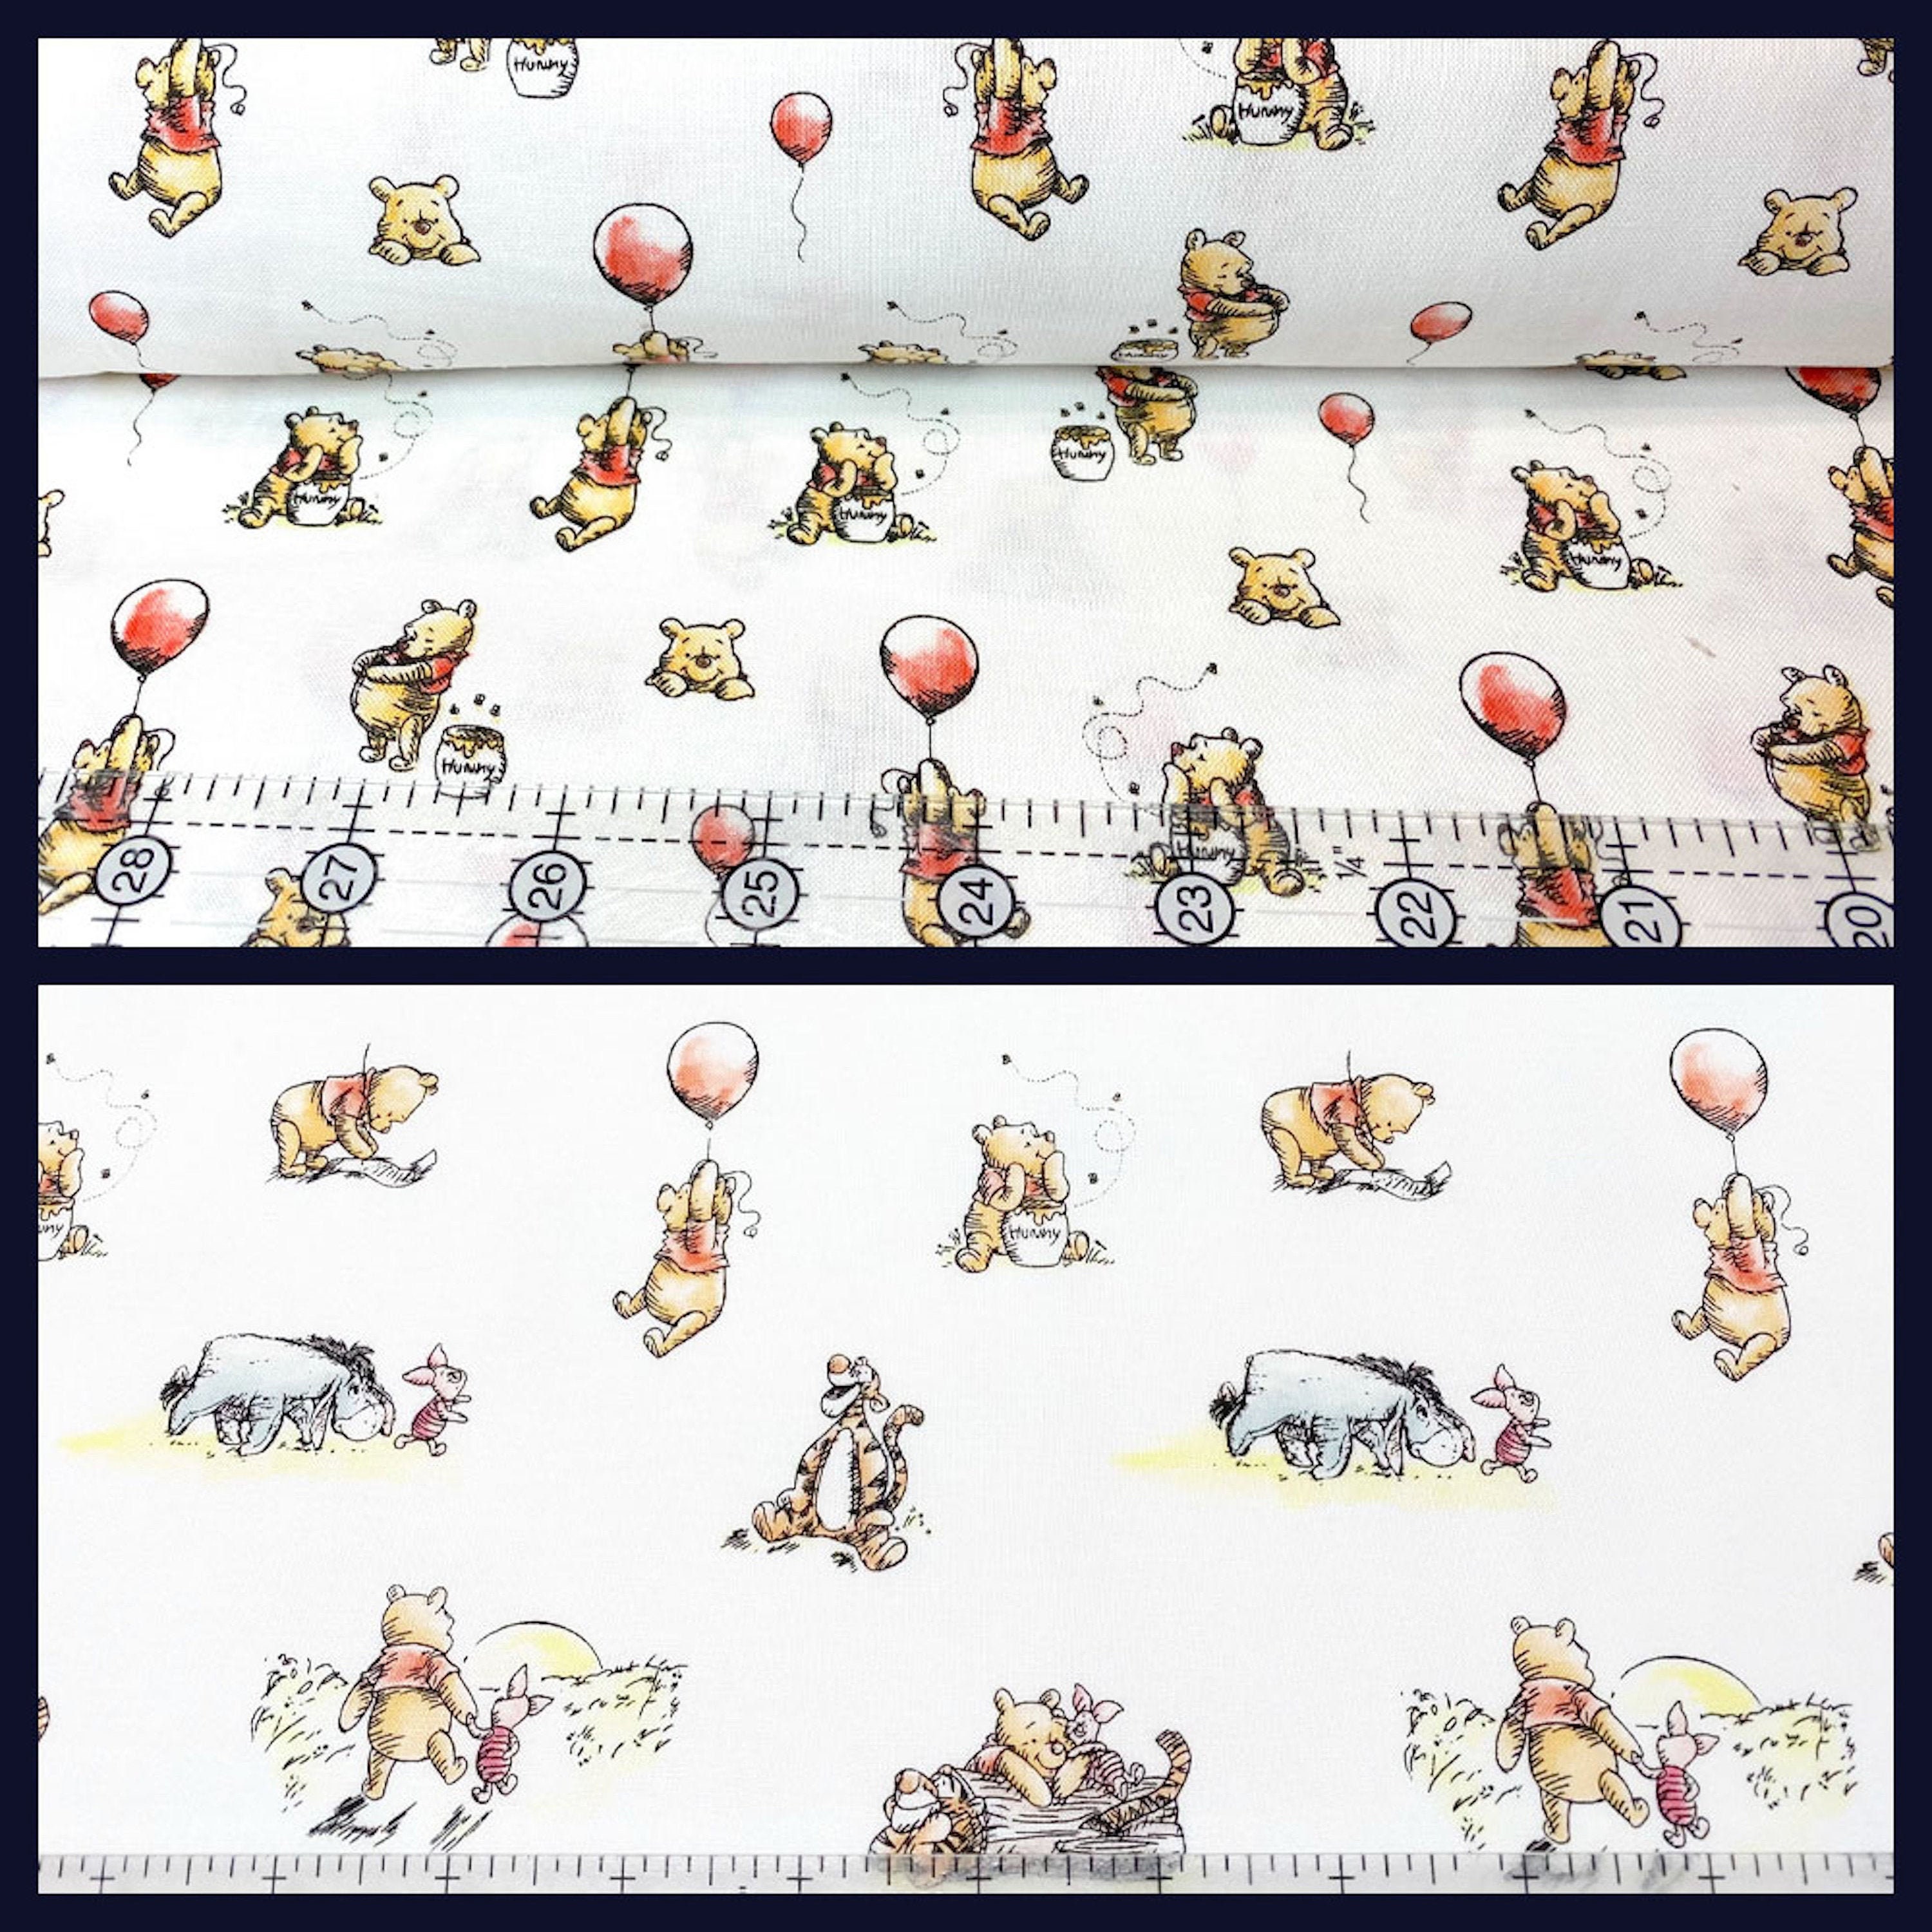 Disney Winnie the Pooh 85430519 1 White Eeyore Camelot Fabrics